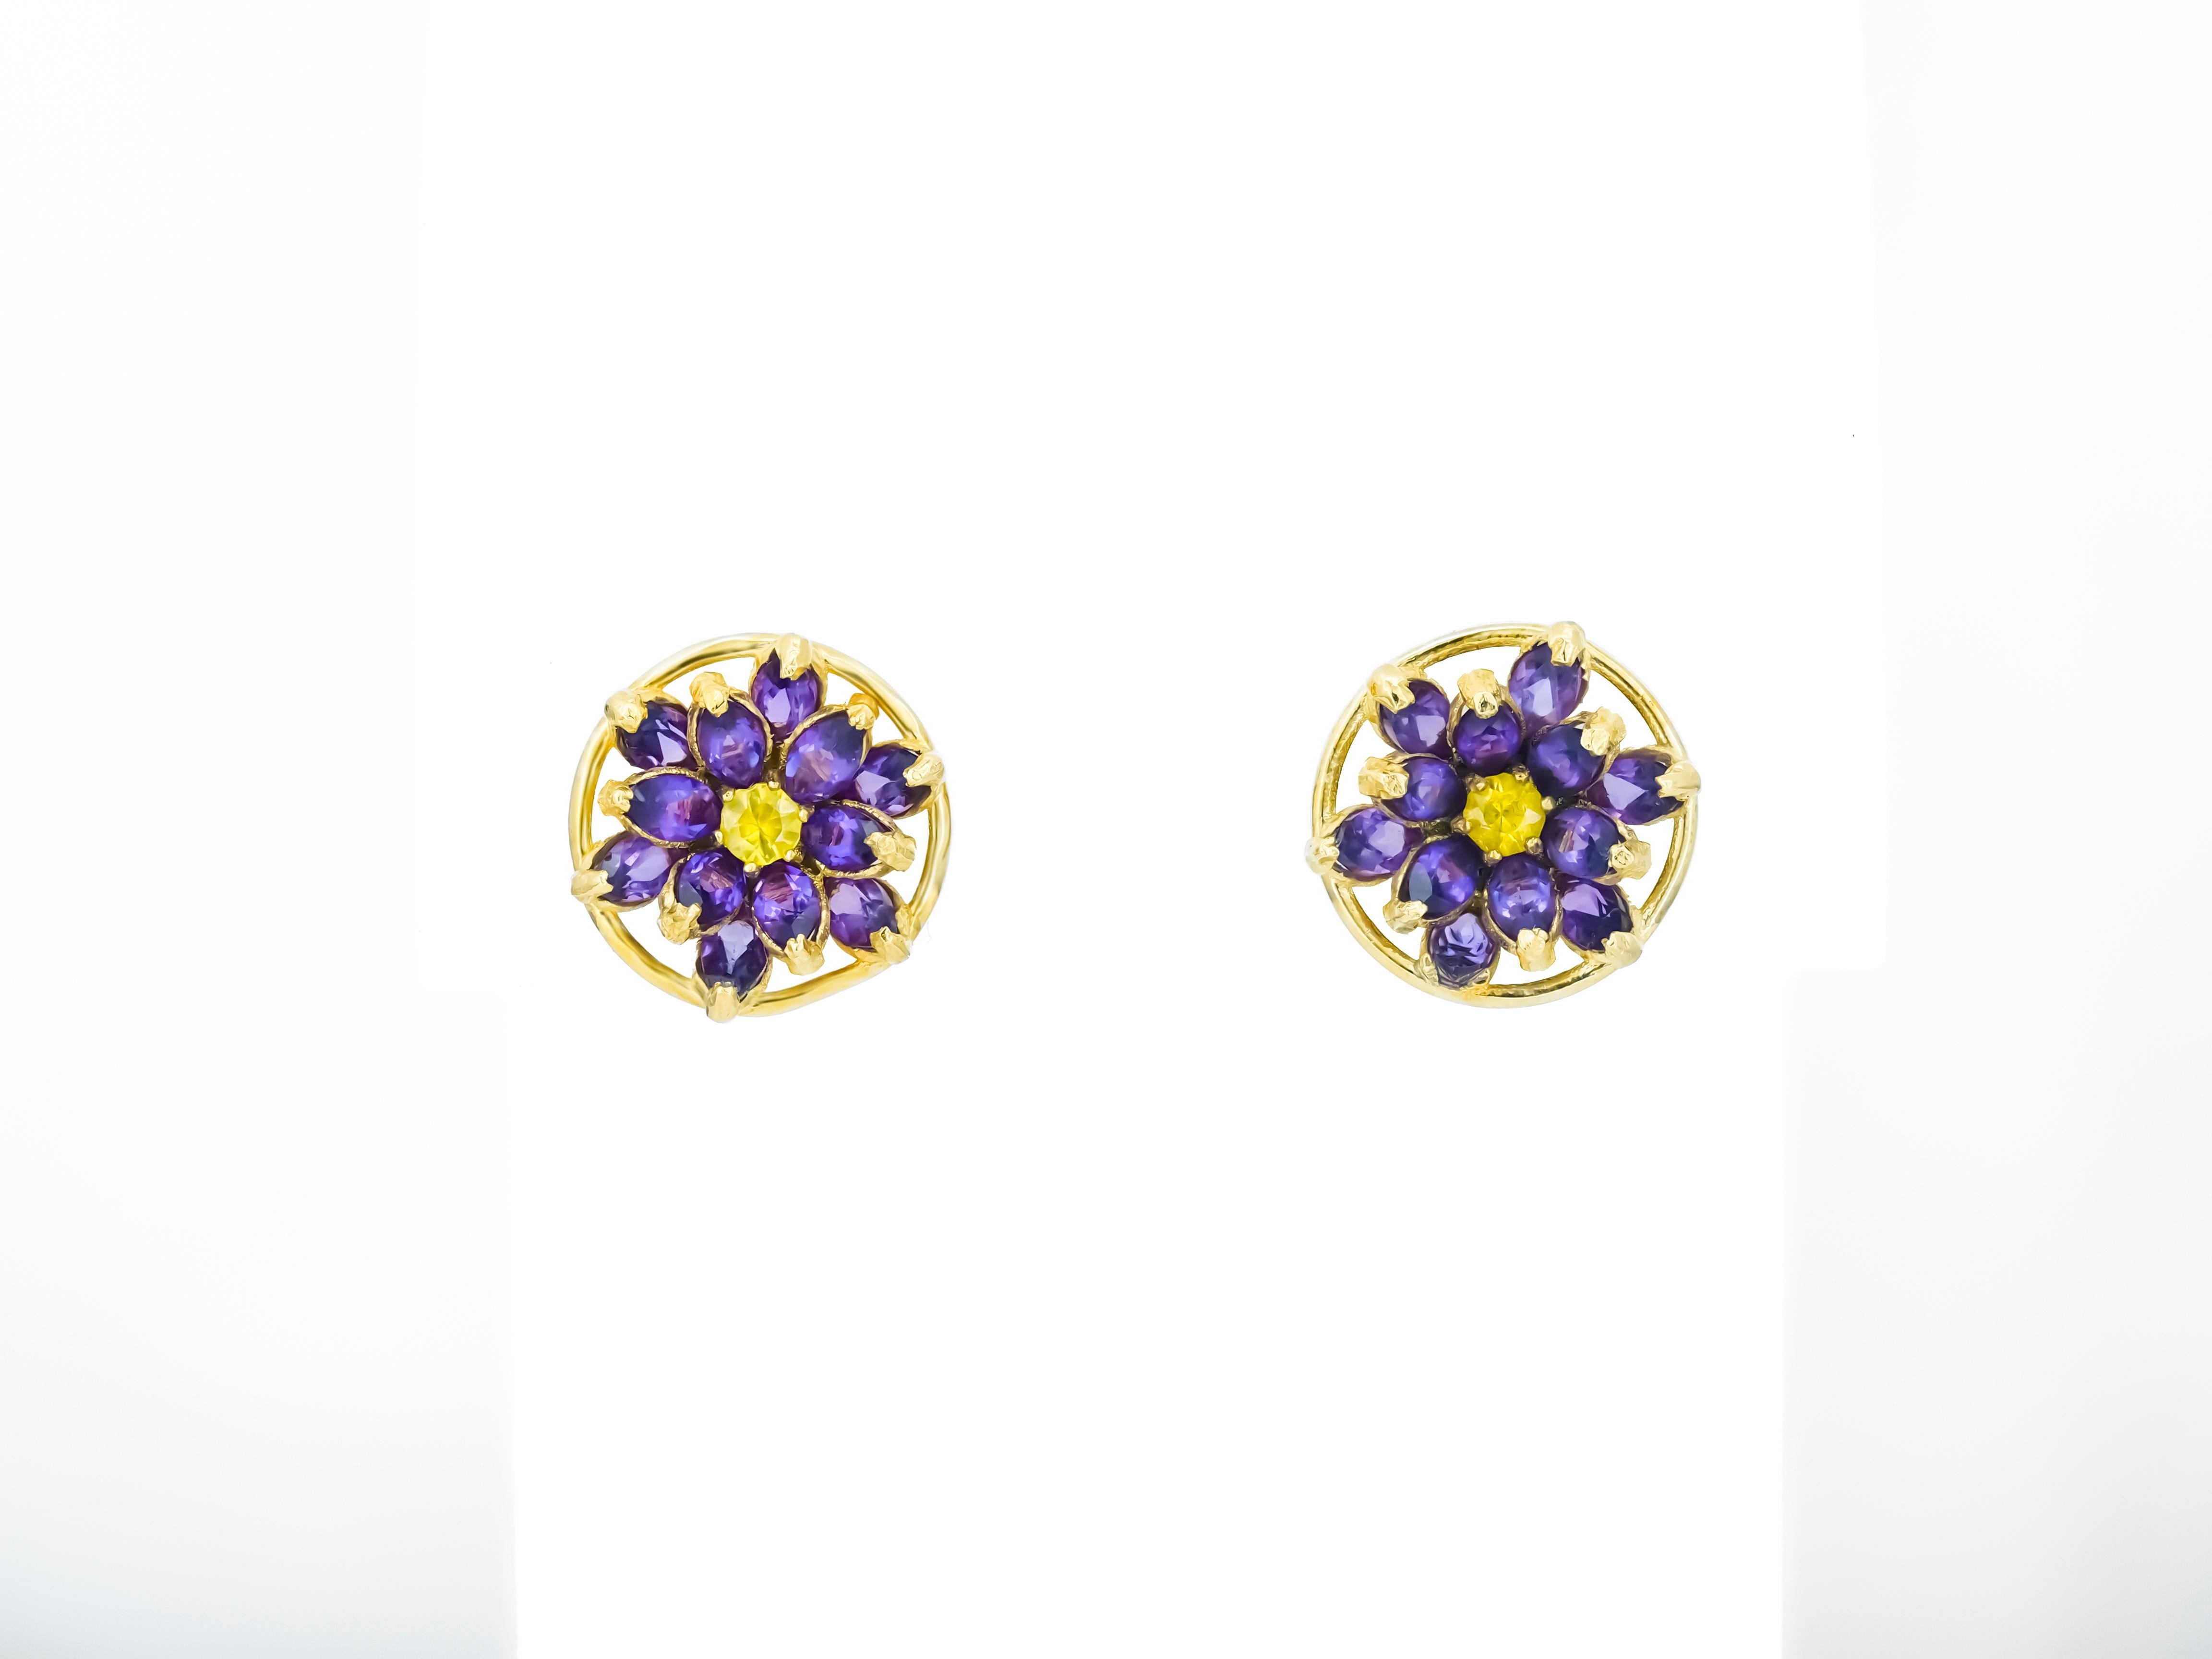 Lotus Flower Earrings Studs in 14k Gold, Amethyst and Sapphires Earrings For Sale 6